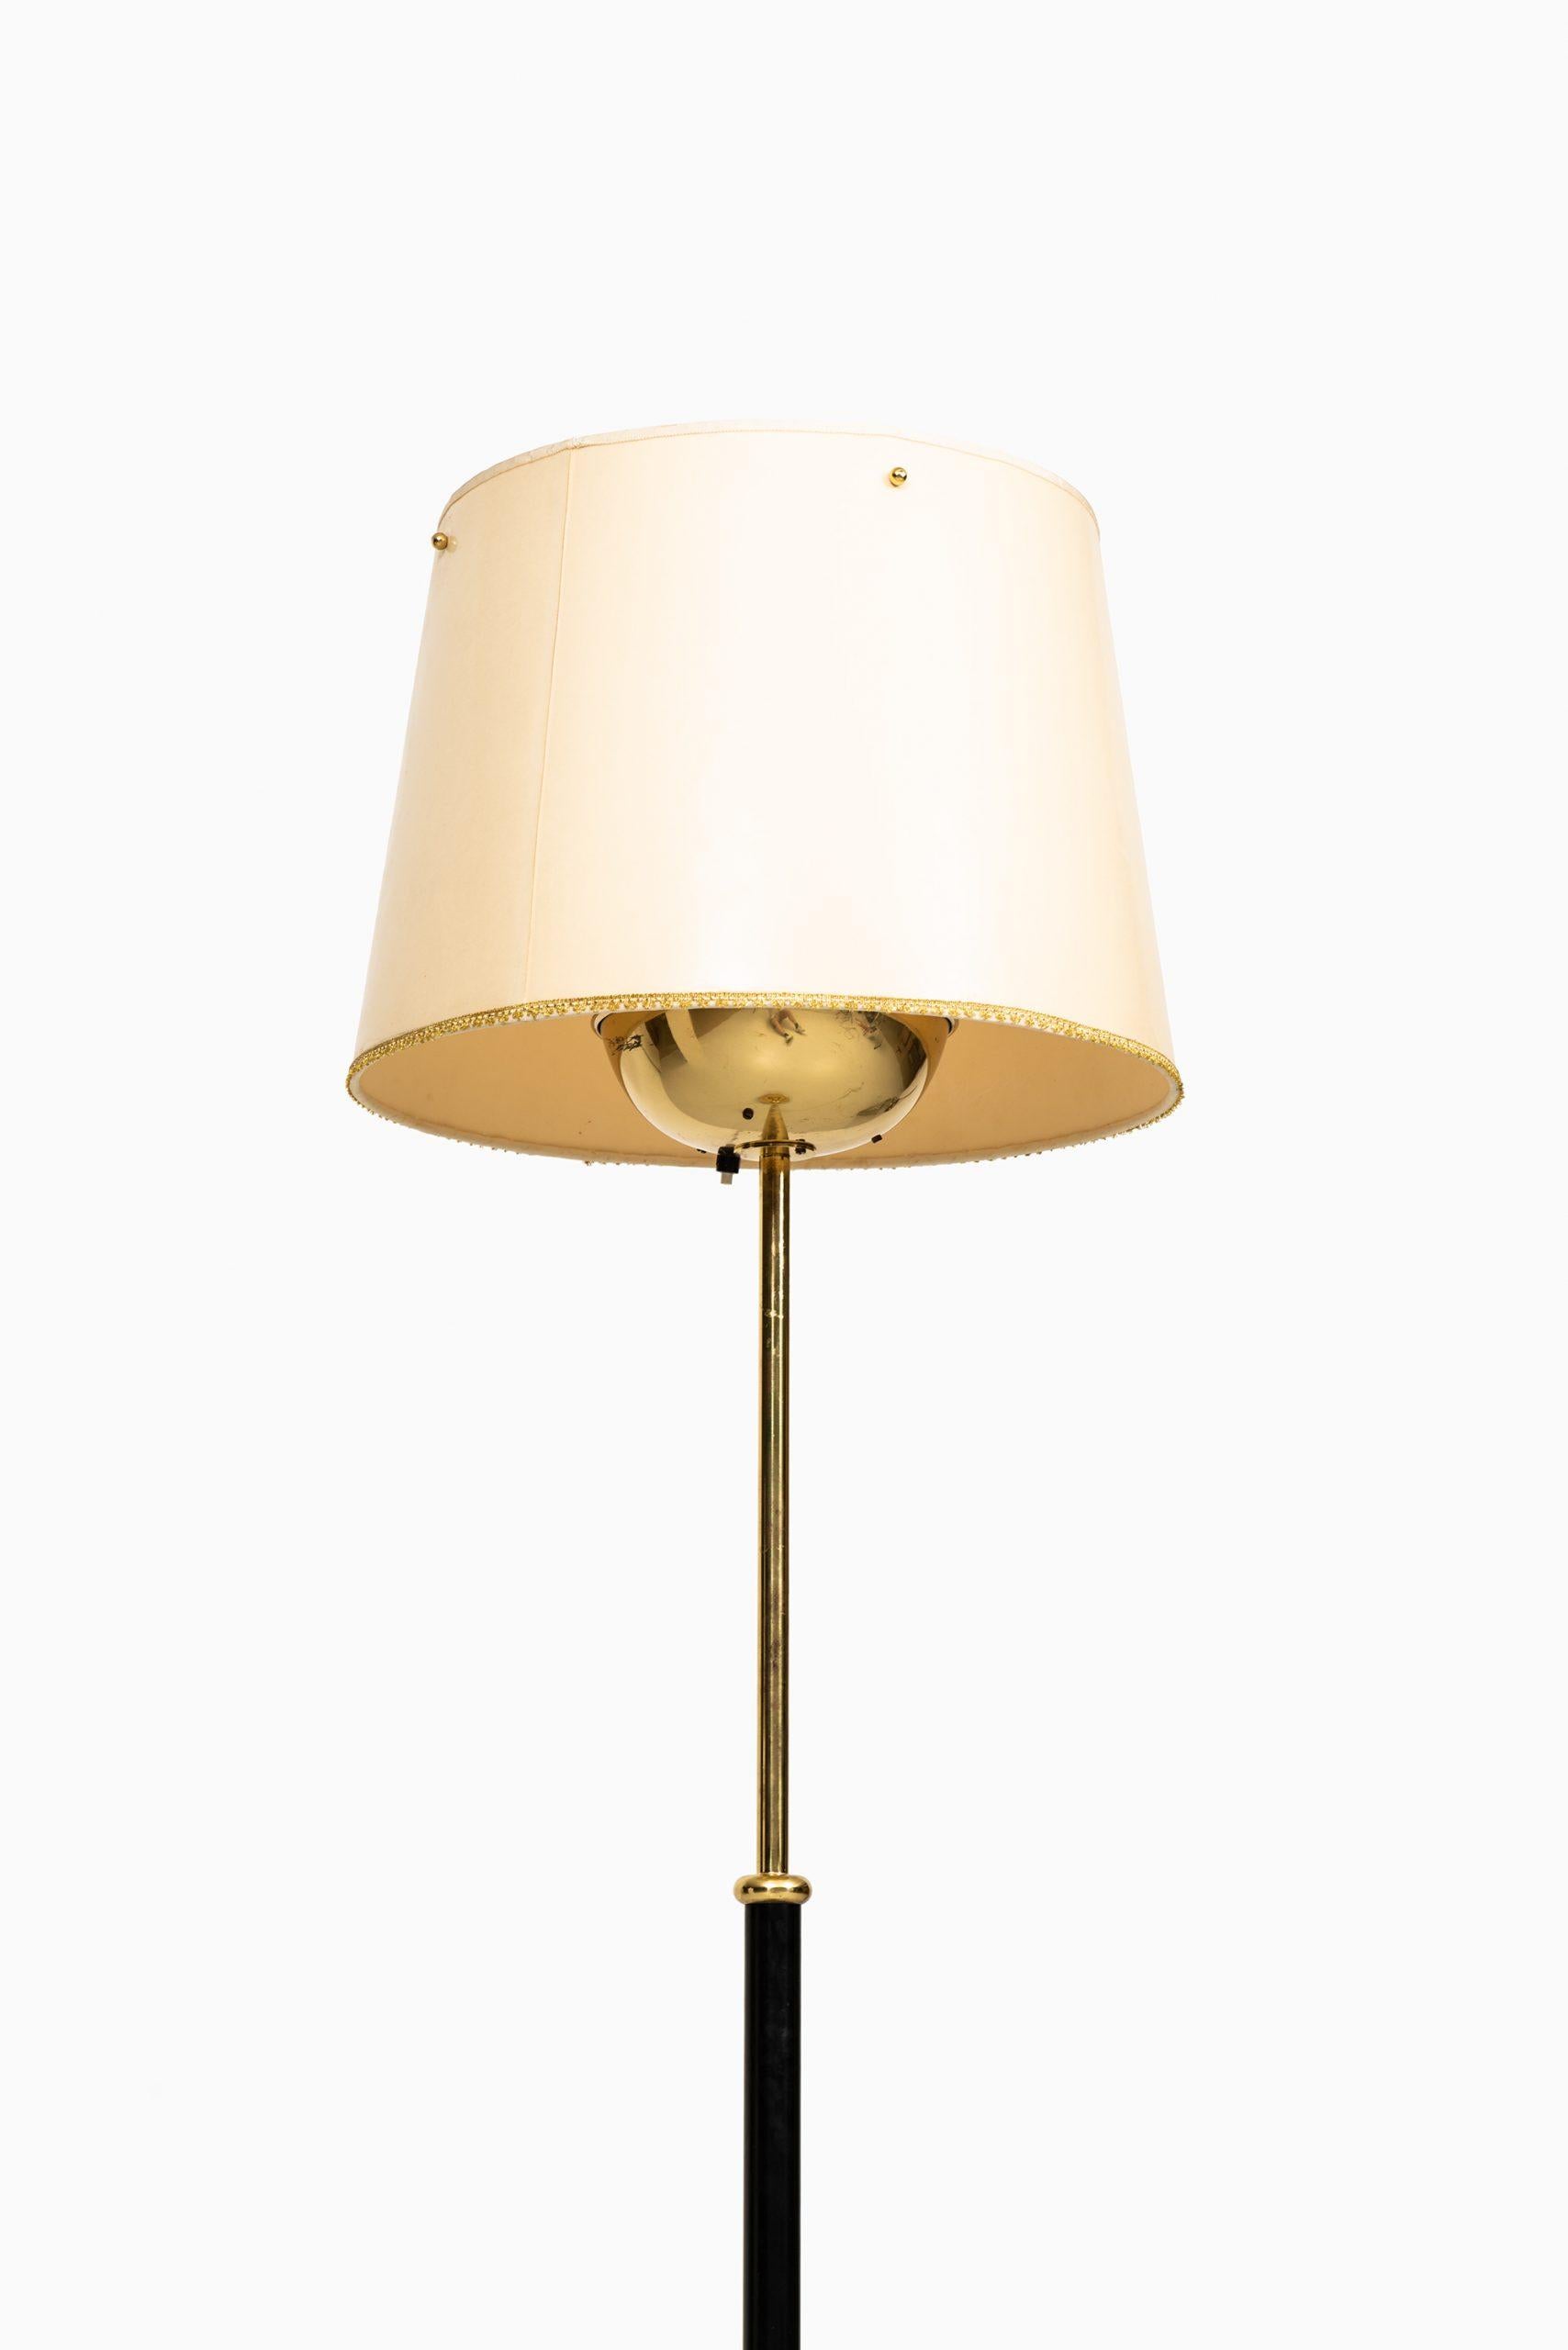 Rare floor lamp model 2564 designed by Josef Frank. Produced by Svenskt Tenn in Sweden.